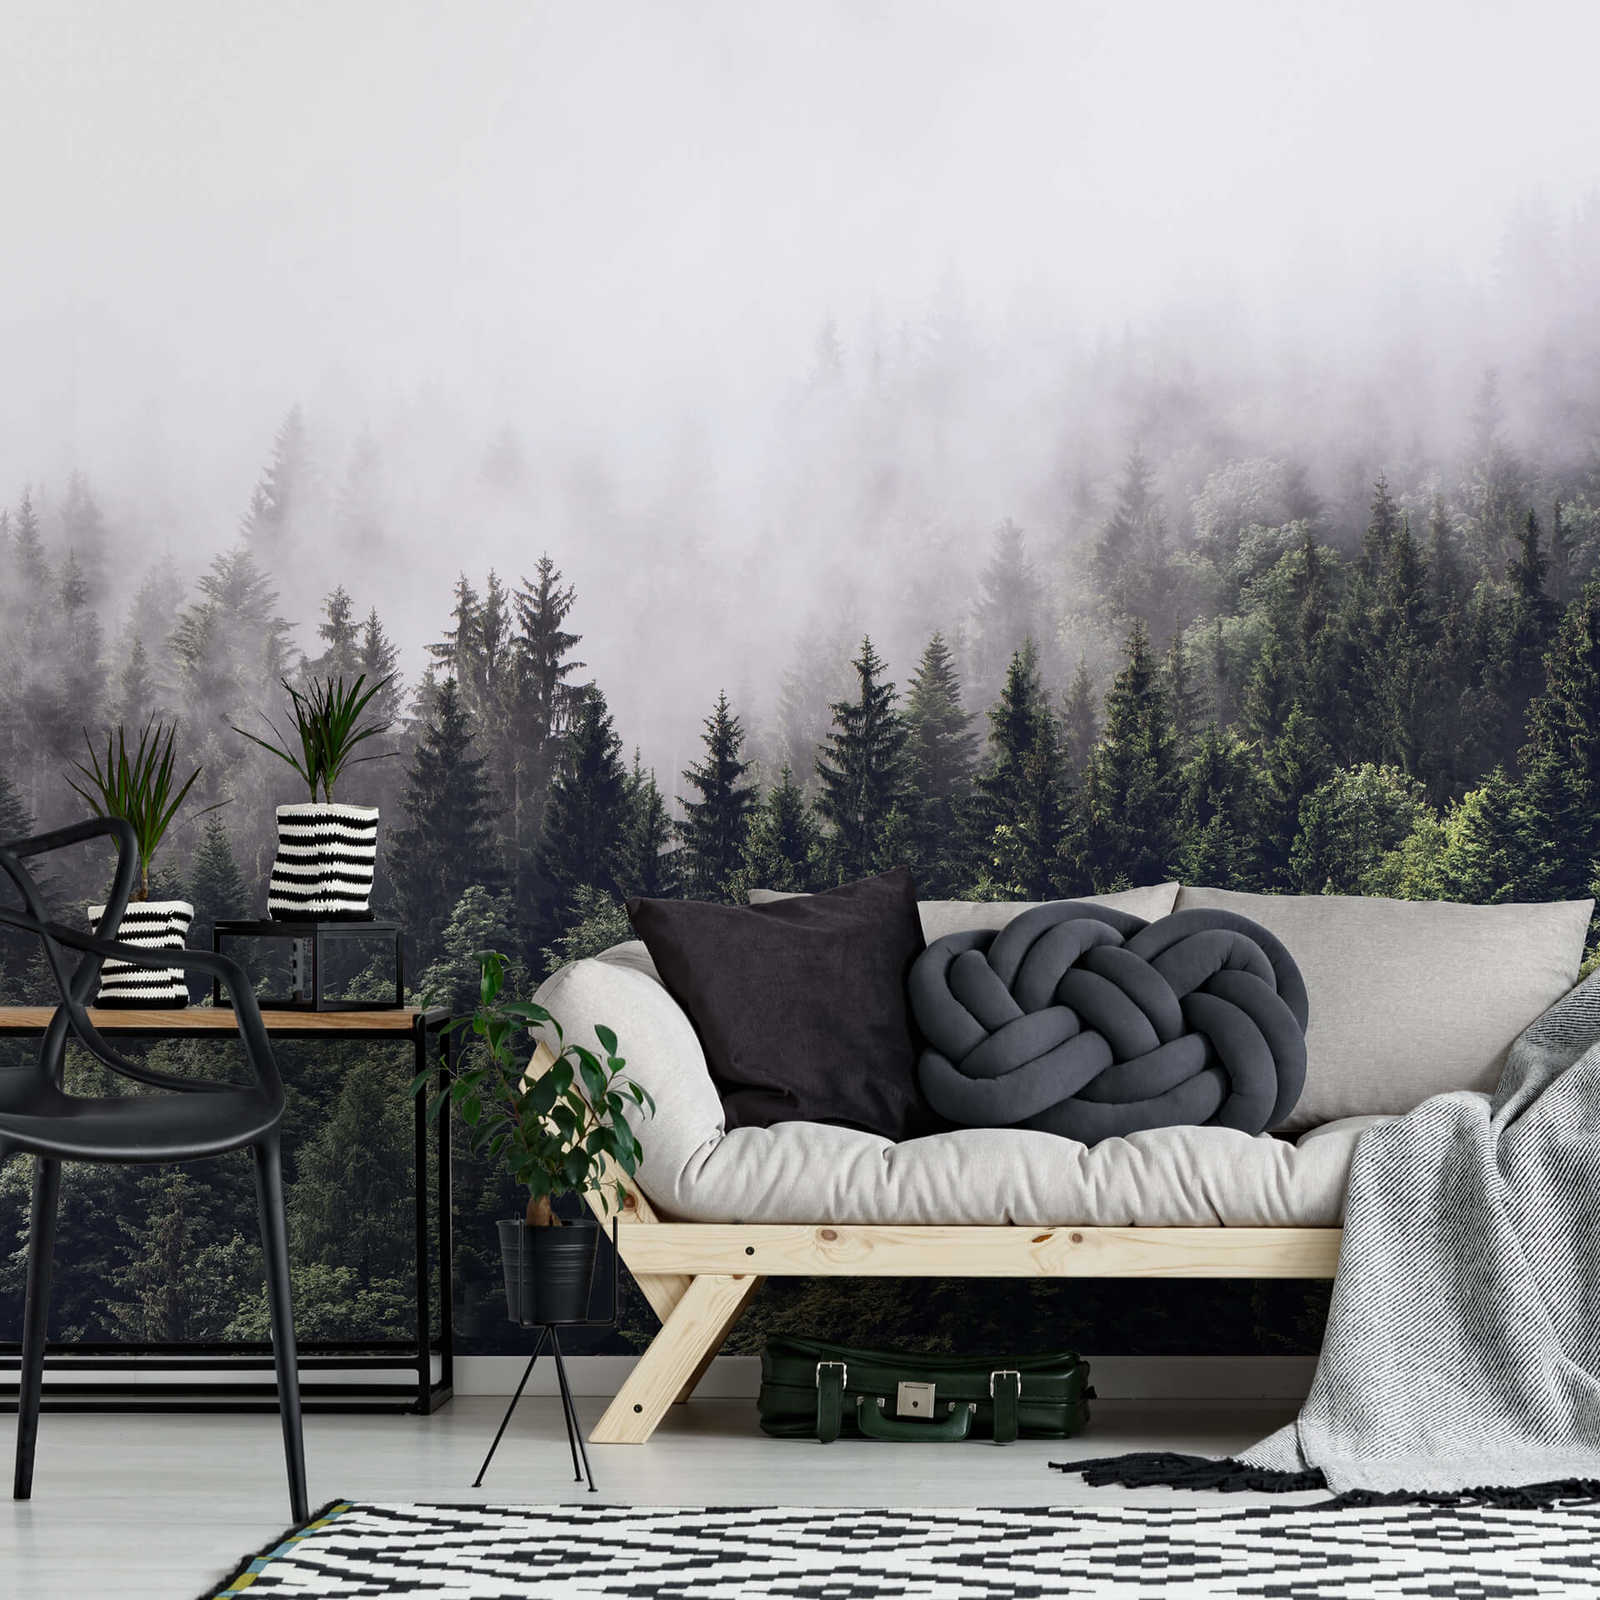             Fototapete Wald im Nebel – Grün, Weiß
        